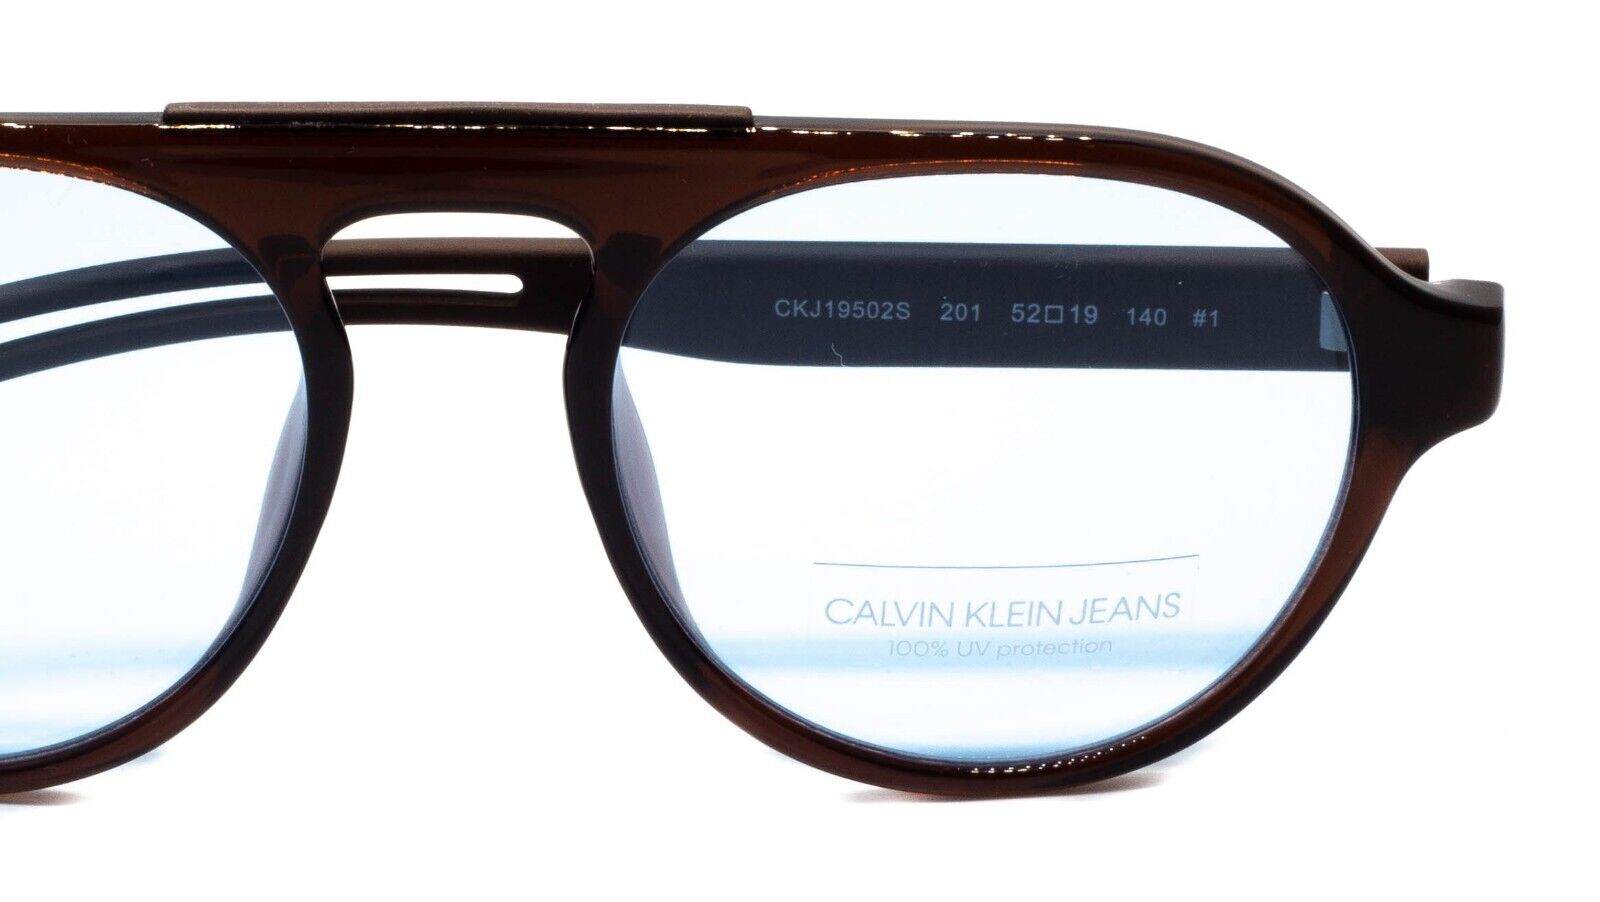 CALVIN KLEIN JEANS CKJ 19502S - Eyewear 201 Eyewear #1 Frames Sunglasses - Shades 52mm New GGV